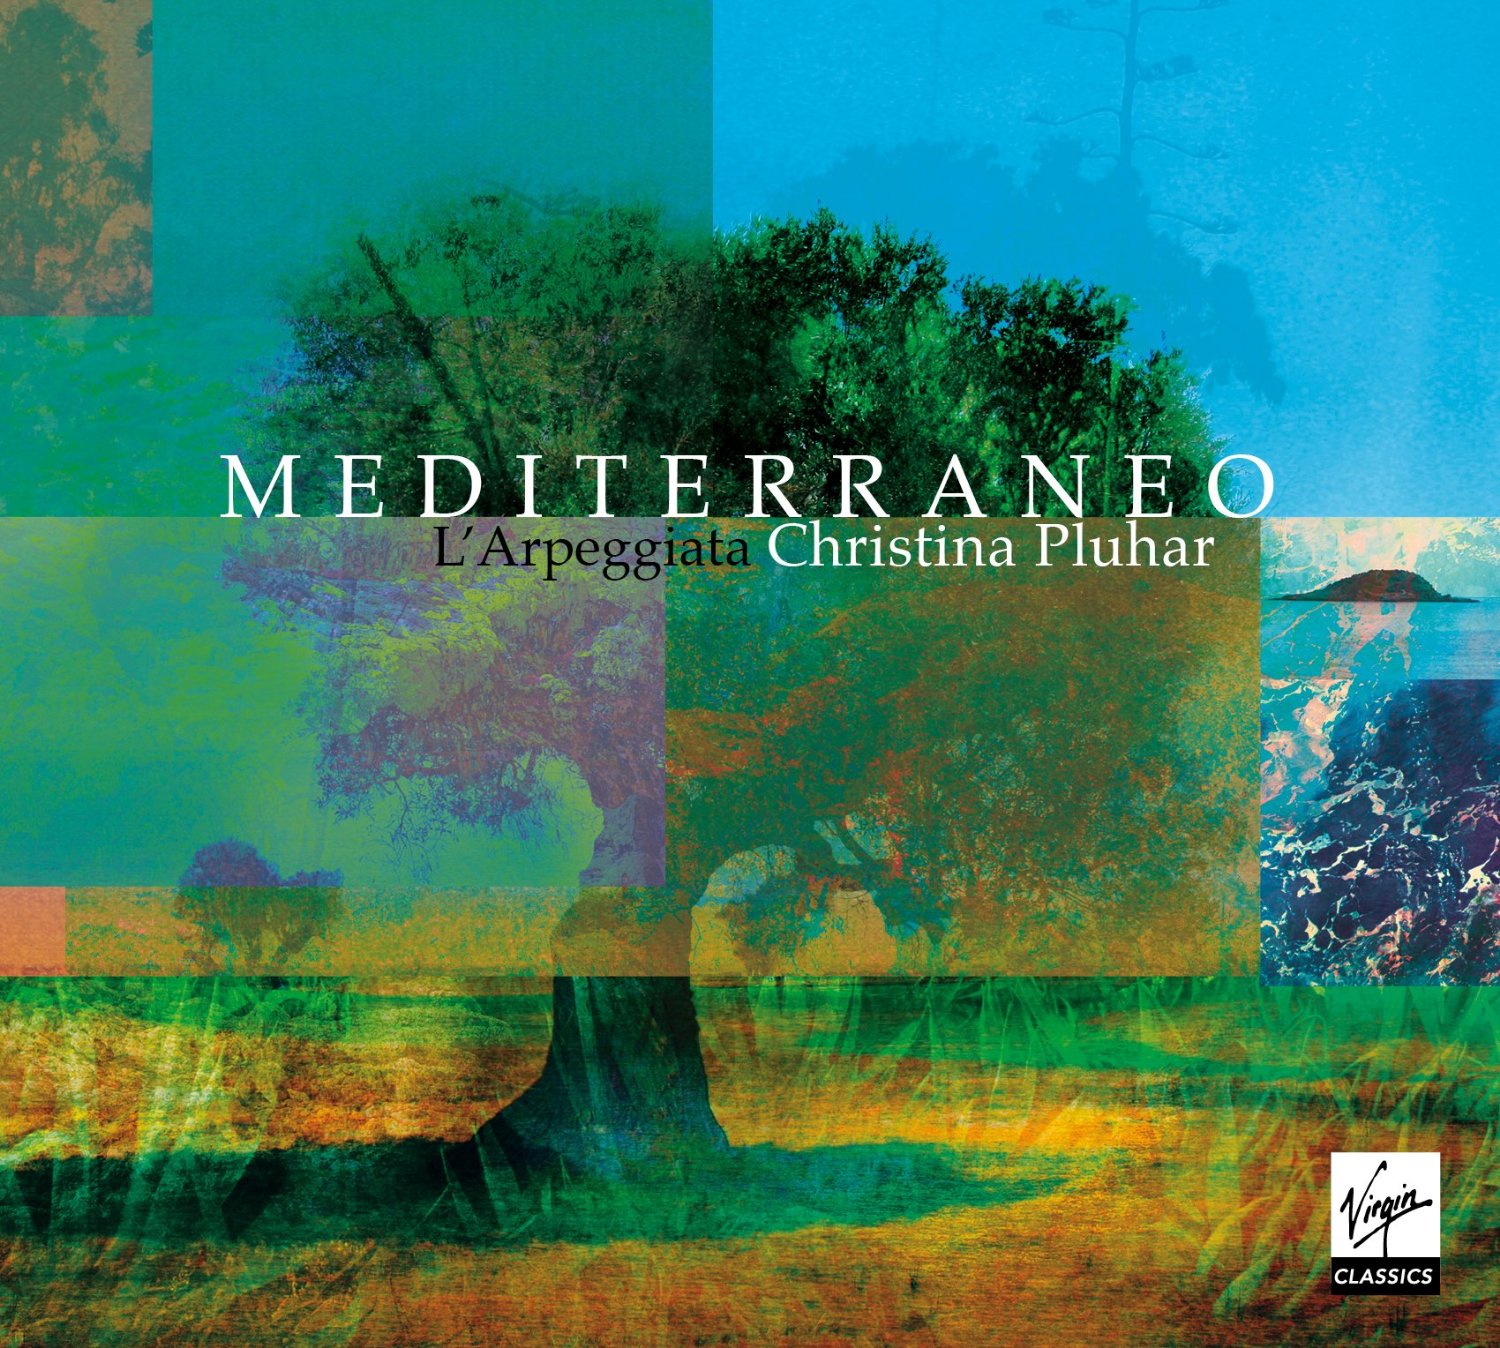 Mediterranean in Baroque, L'Arpeggiata on Mediterraneo,Christina Pluhar